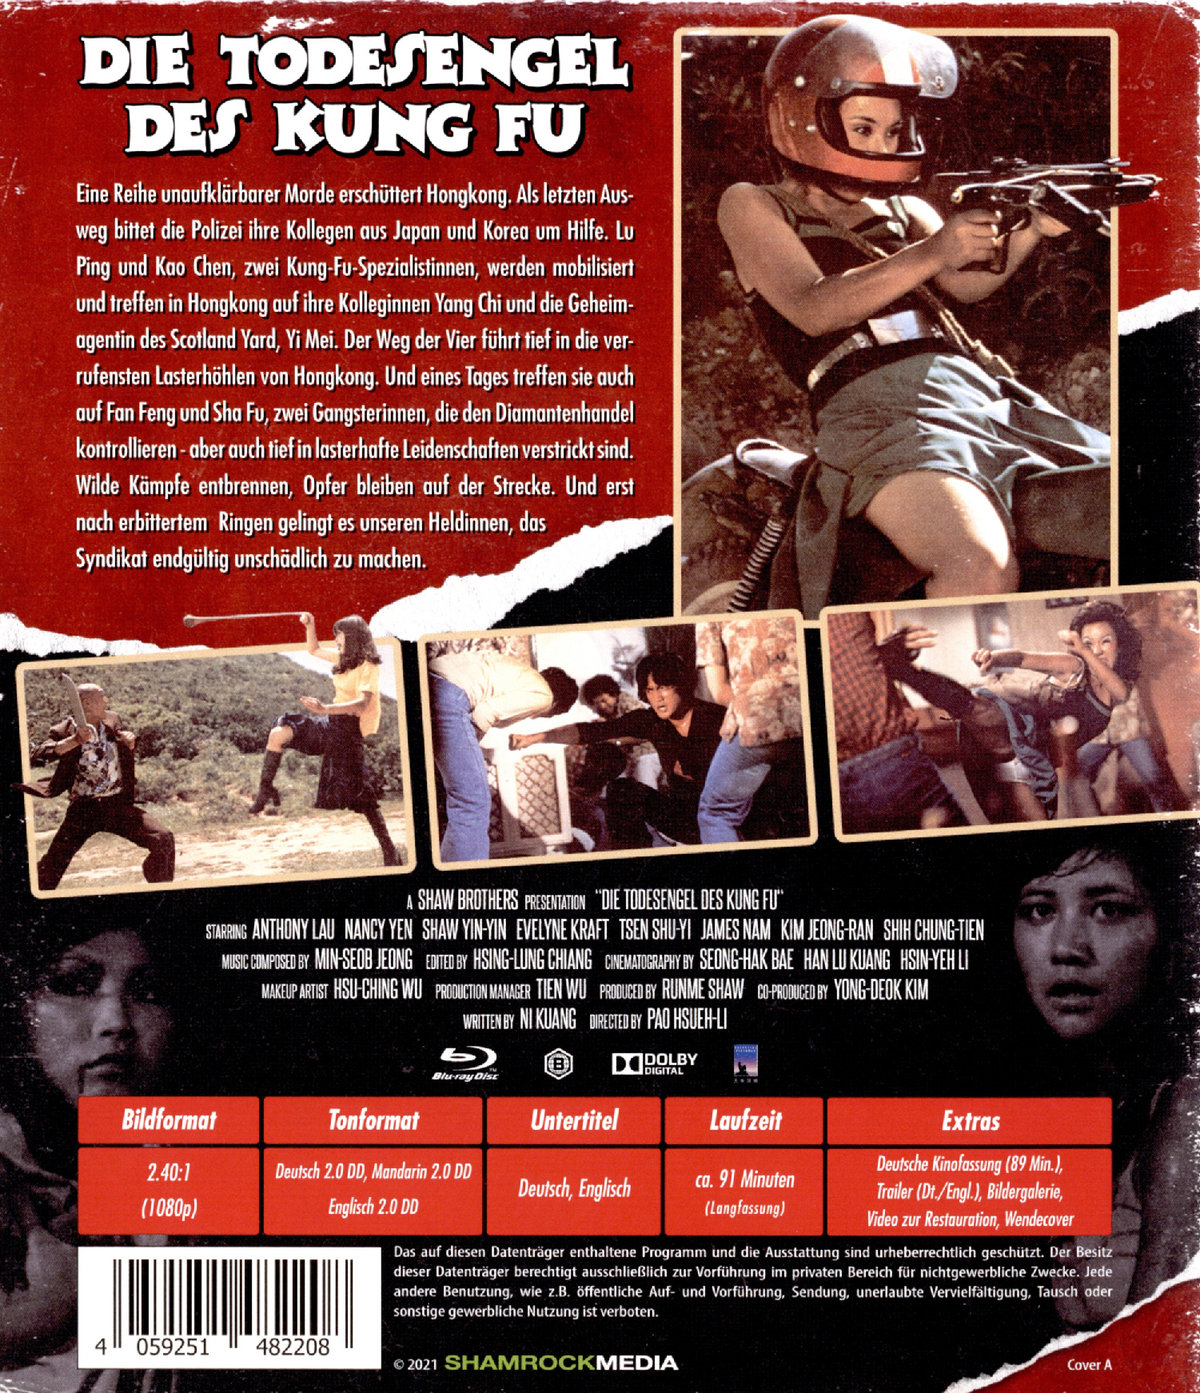 Todesengel des Kung Fu, Die (blu-ray) (A)